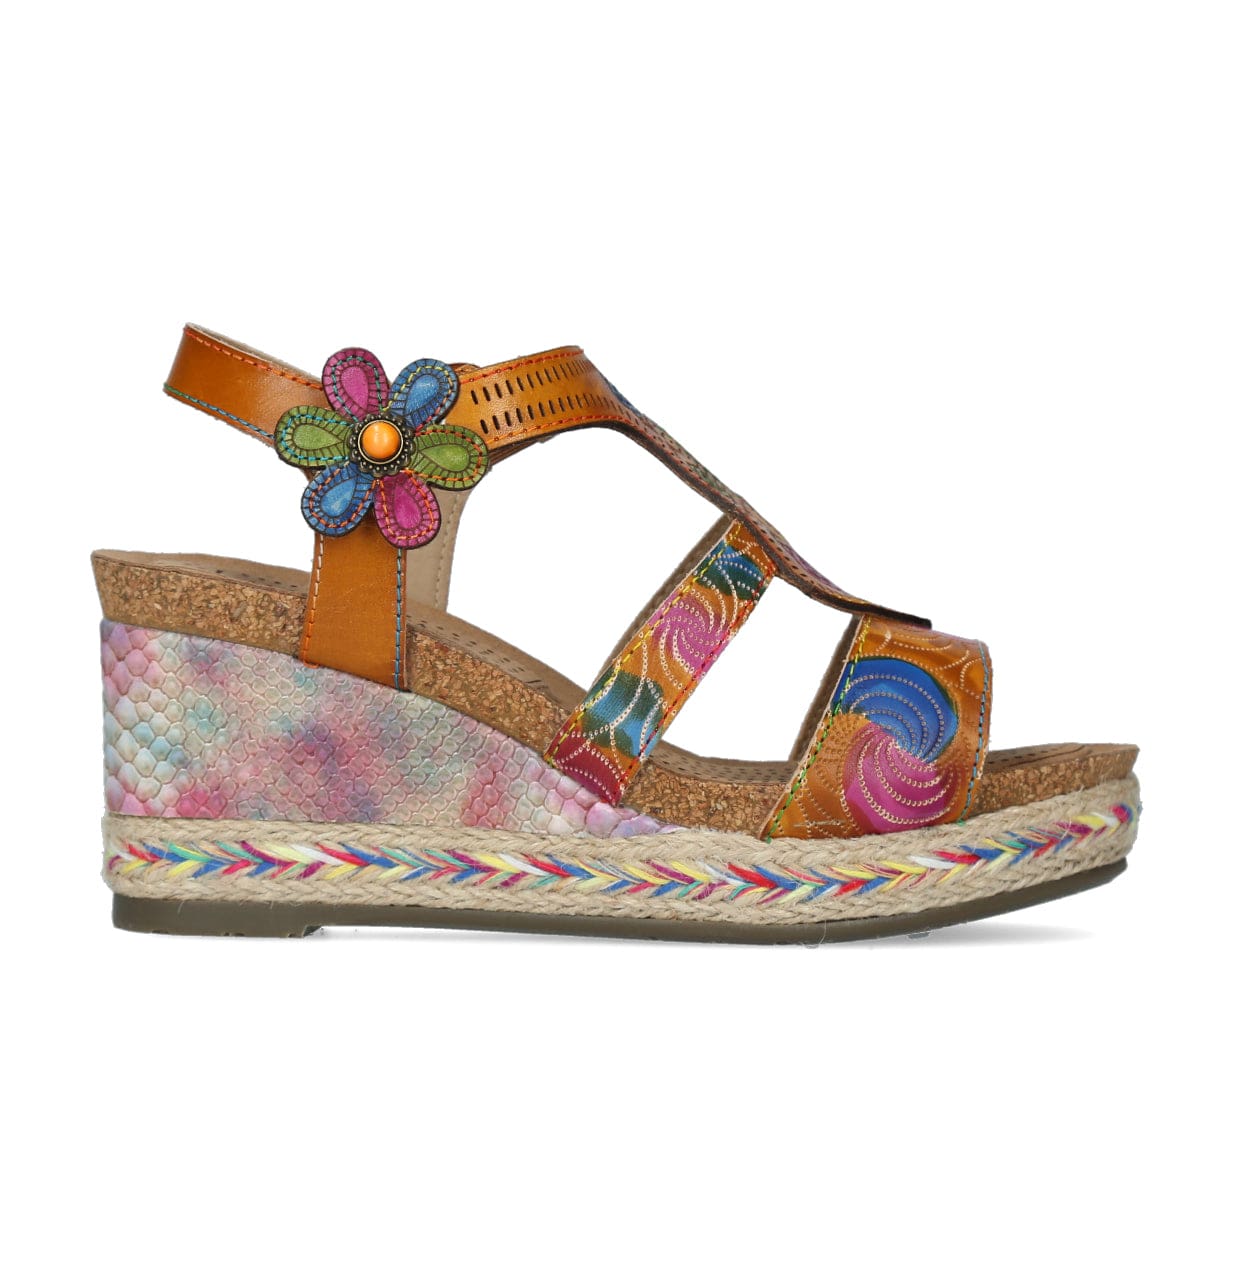 FACYO shoes 25 - 35 / Camel - Sandal